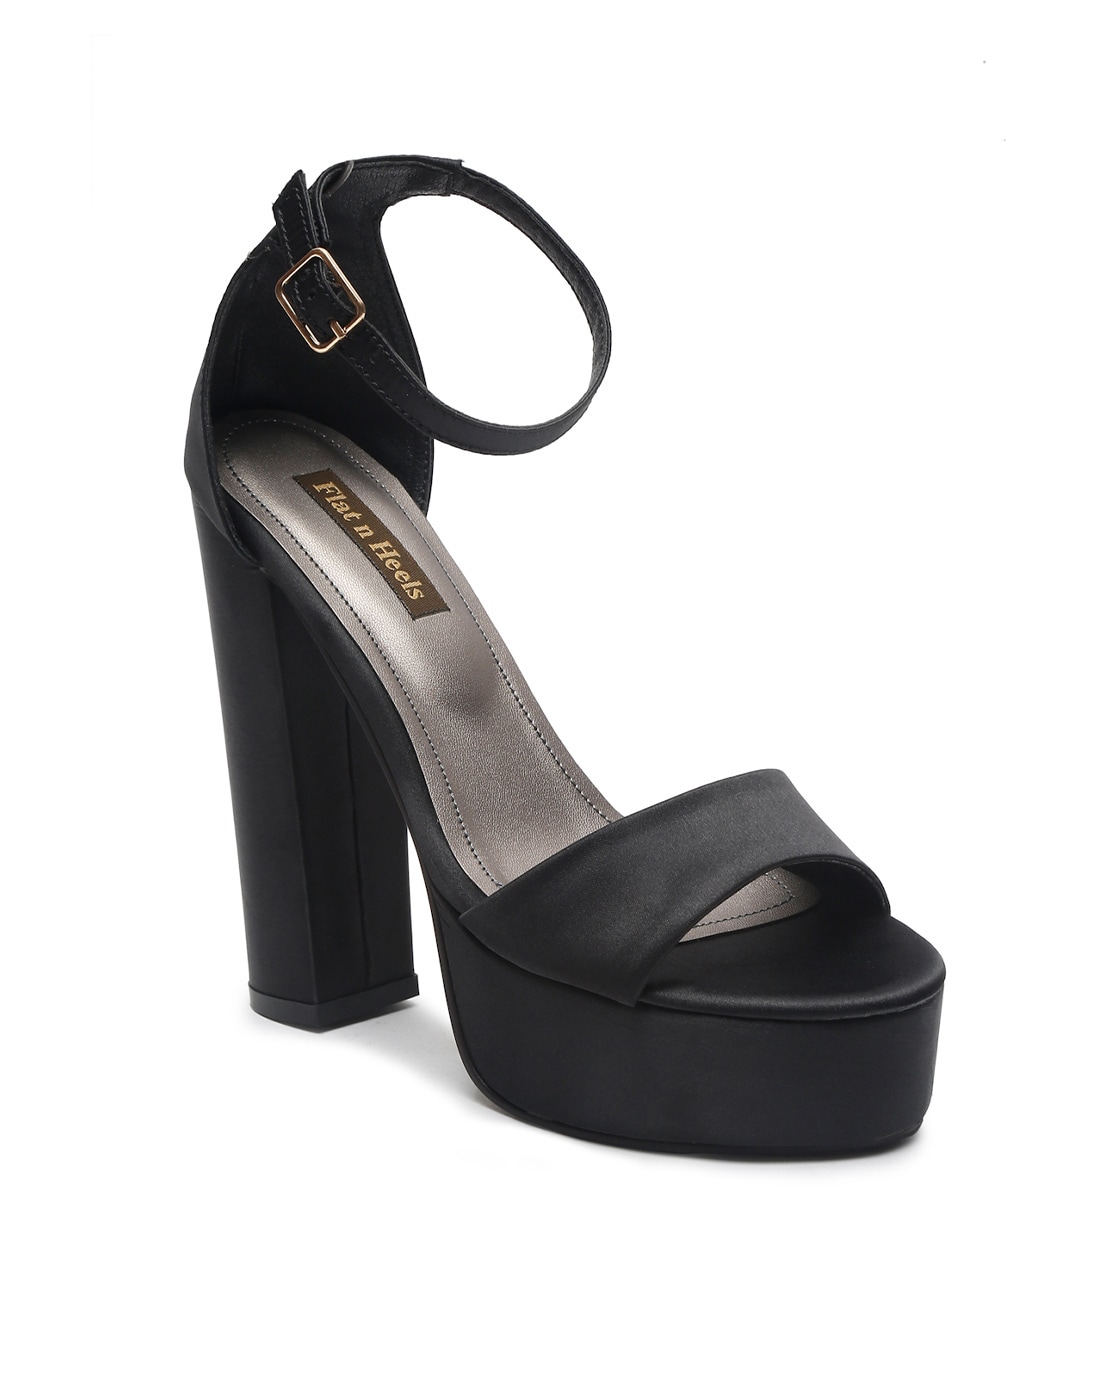 Buy Black Heeled Sandals for Women by CLARKS Online | Ajio.com